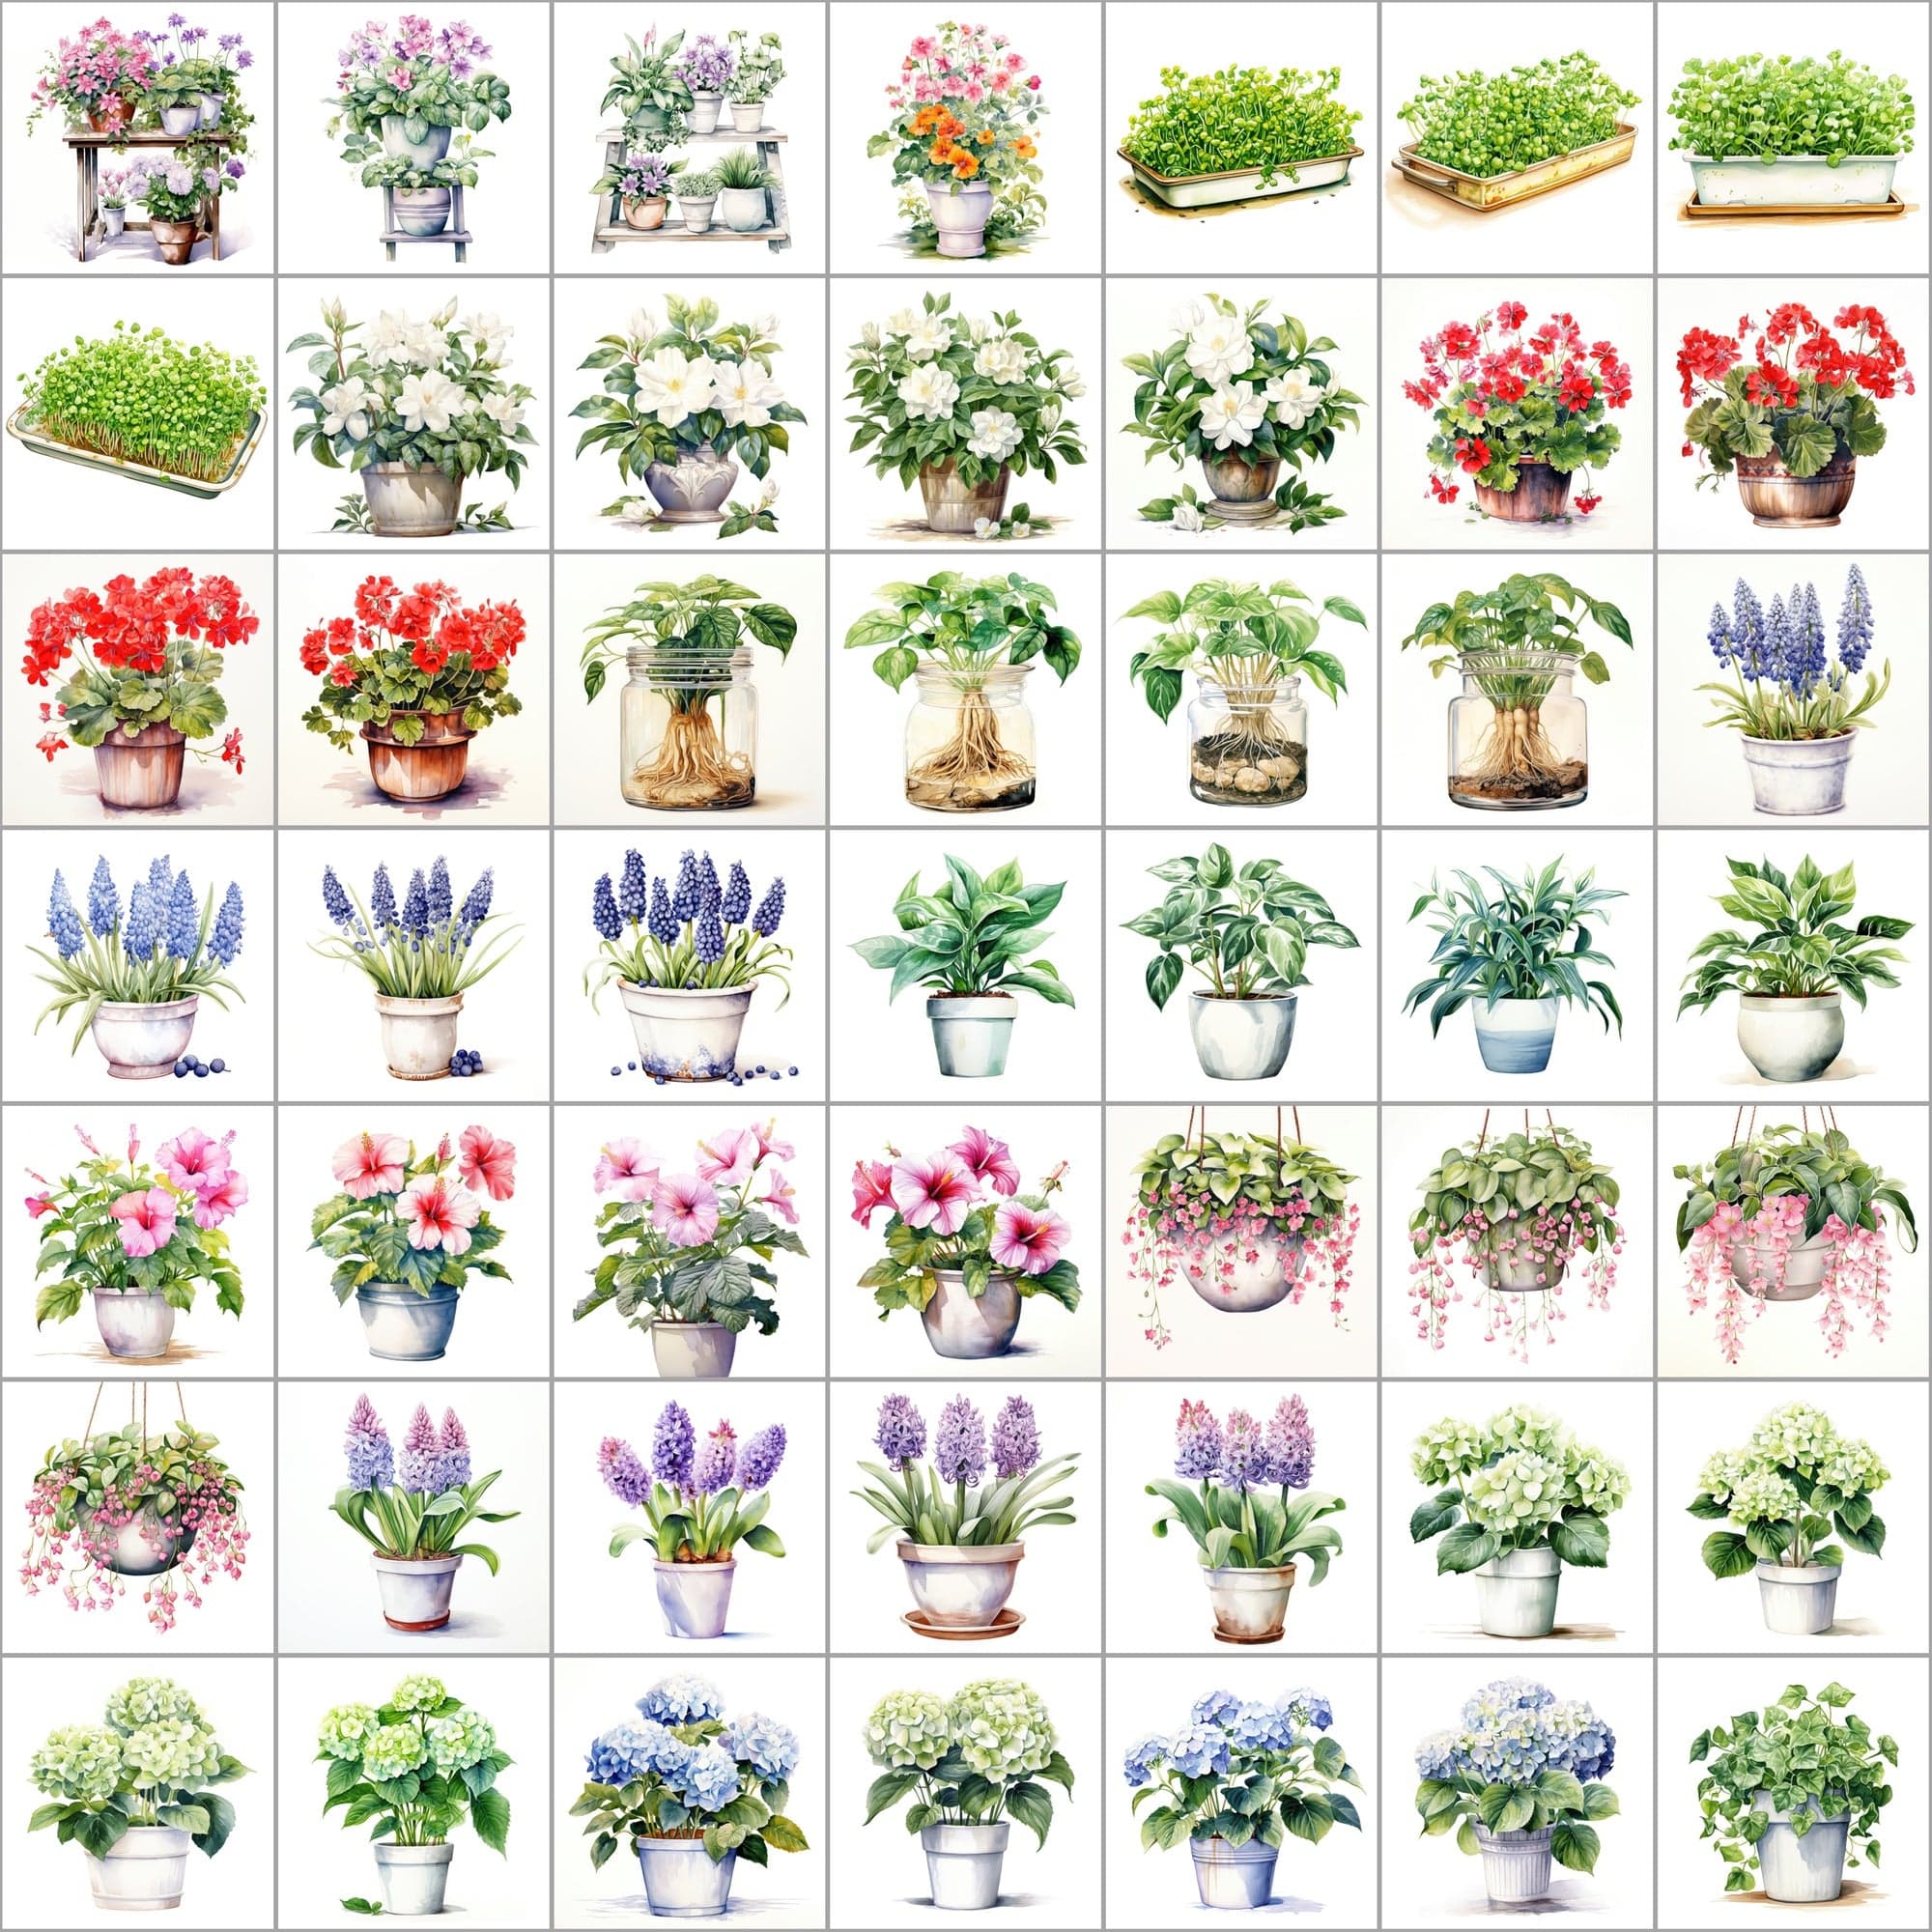 550 Watercolor Plant & Fruit Pot Images - Vibrant PNG Cliparts with Transparent and White Backgrounds Digital Download Sumobundle